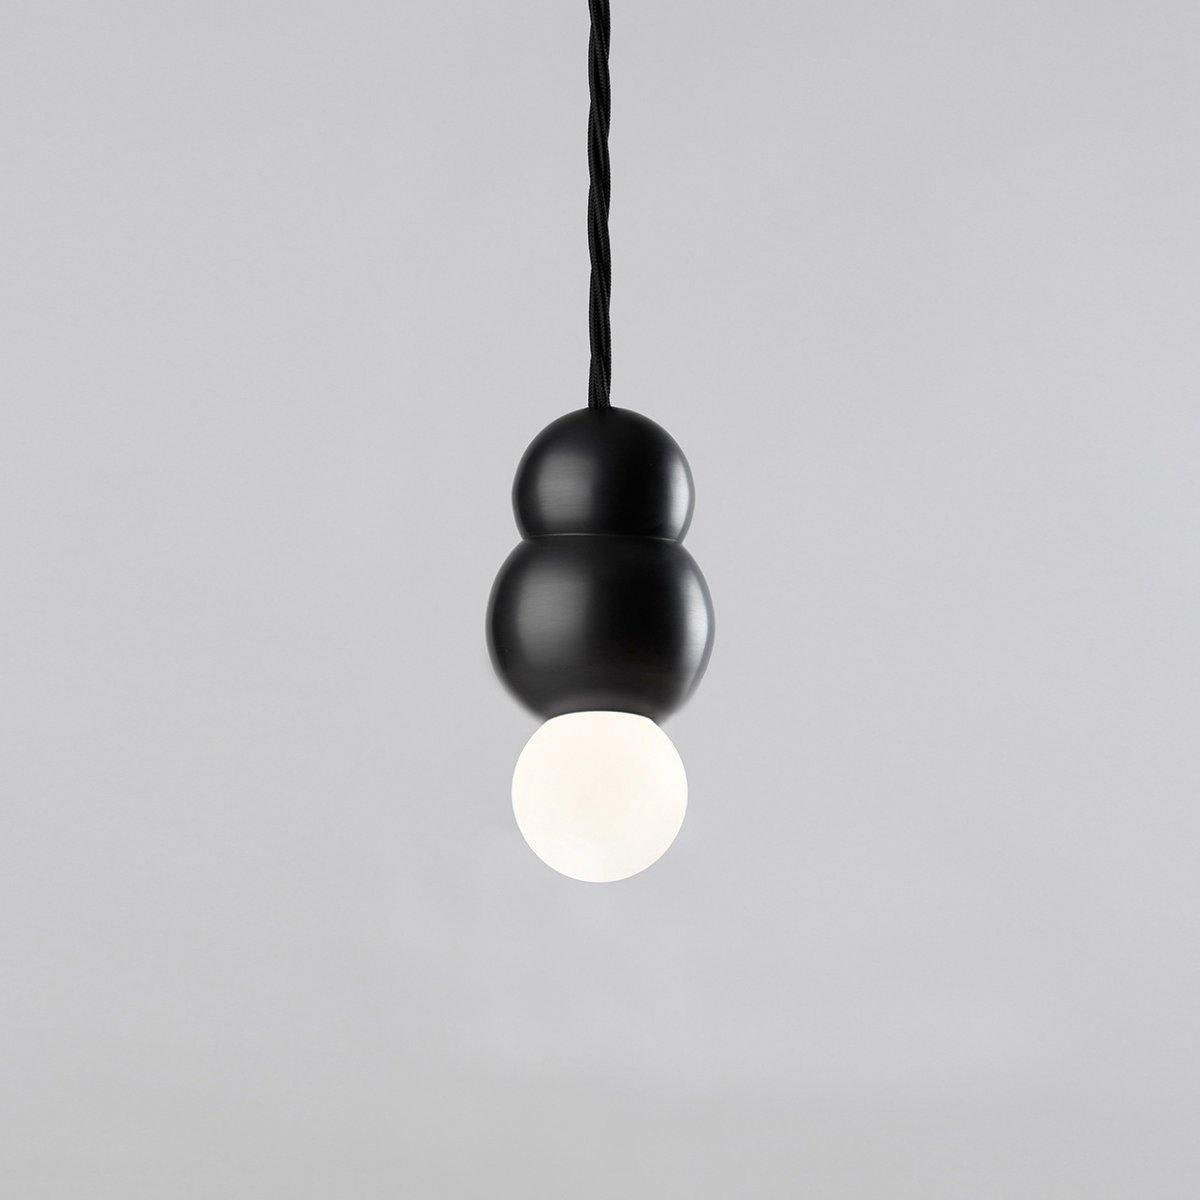 Black Flex Ball Light Pendant Series ∅ 3.14″ x H 5.03″ (8cm Diameter x 12.8cm Height)